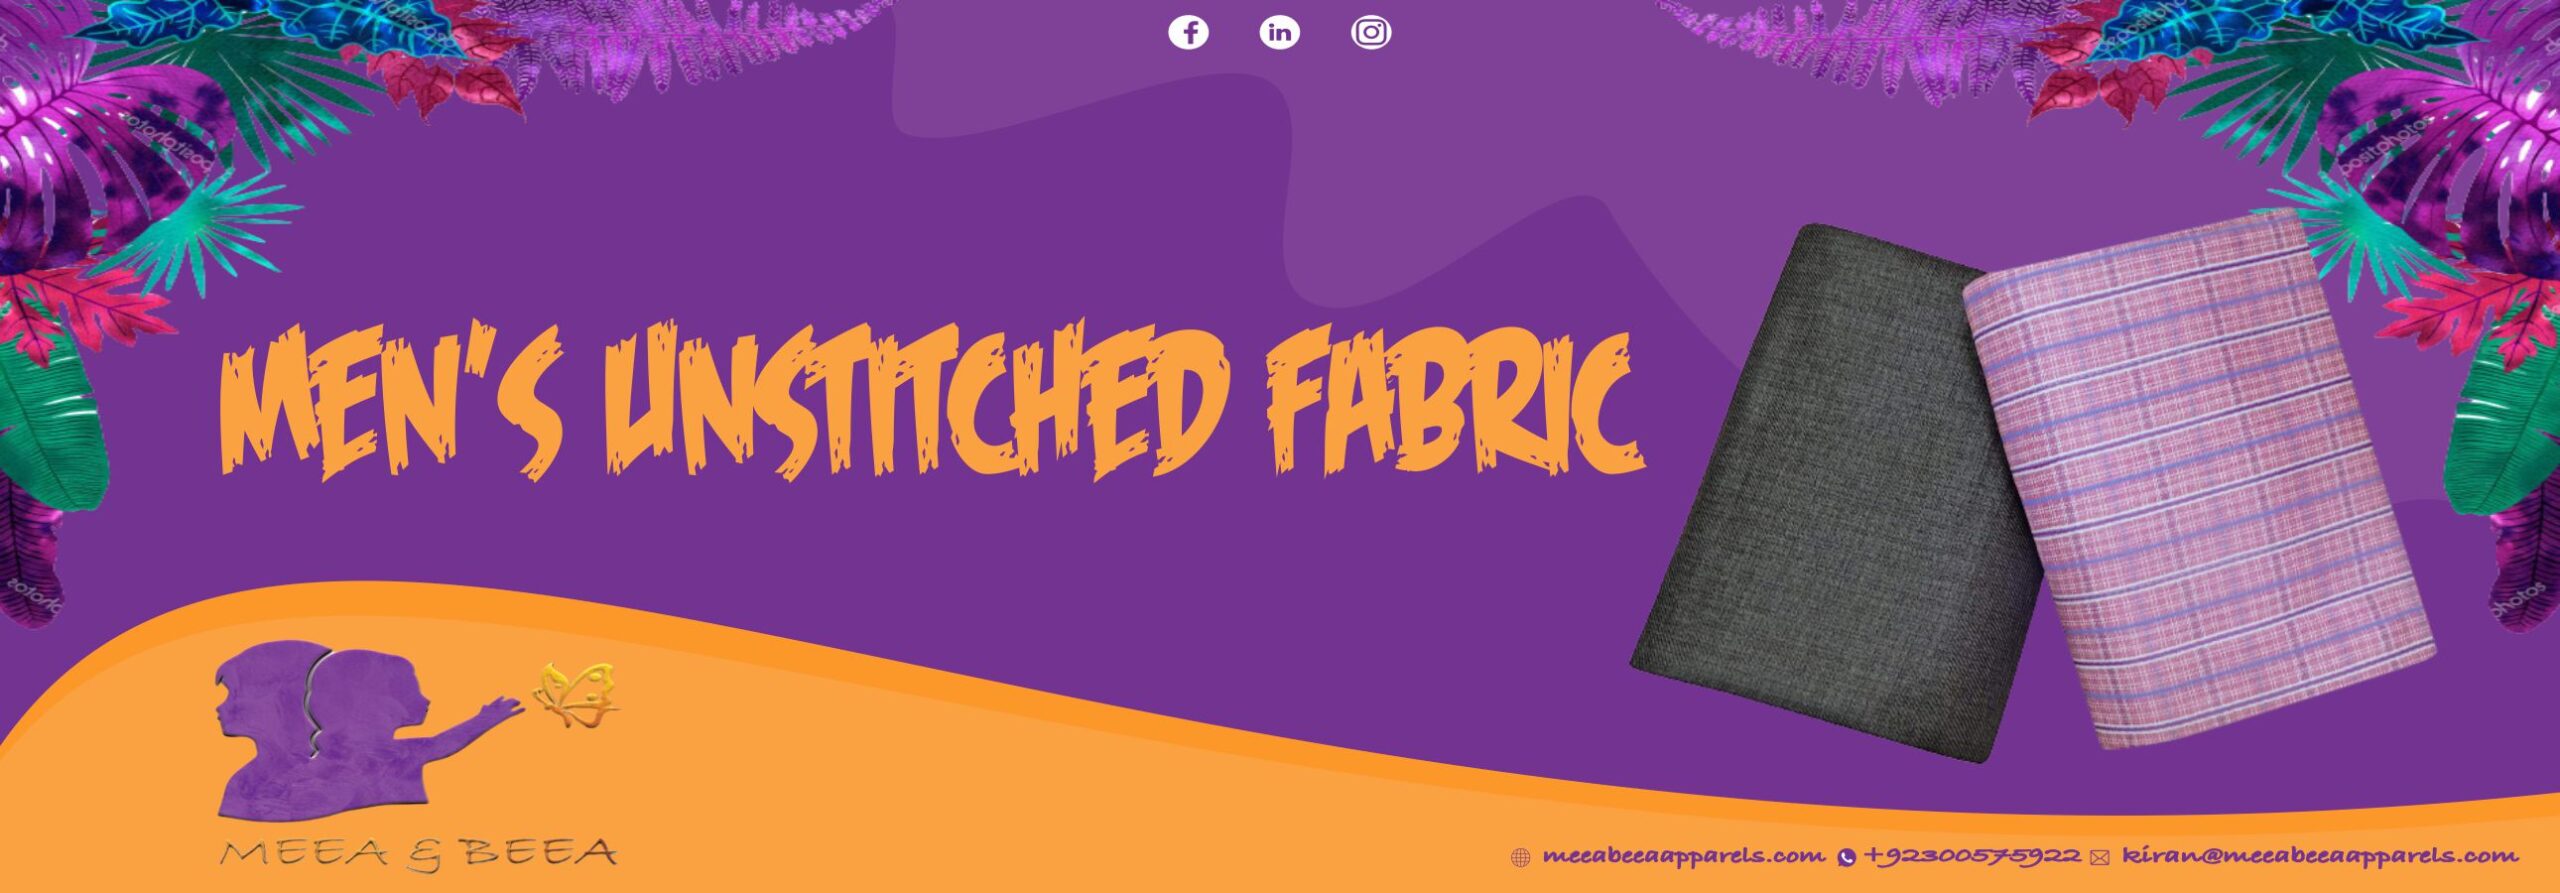 Un-stitched Fabric